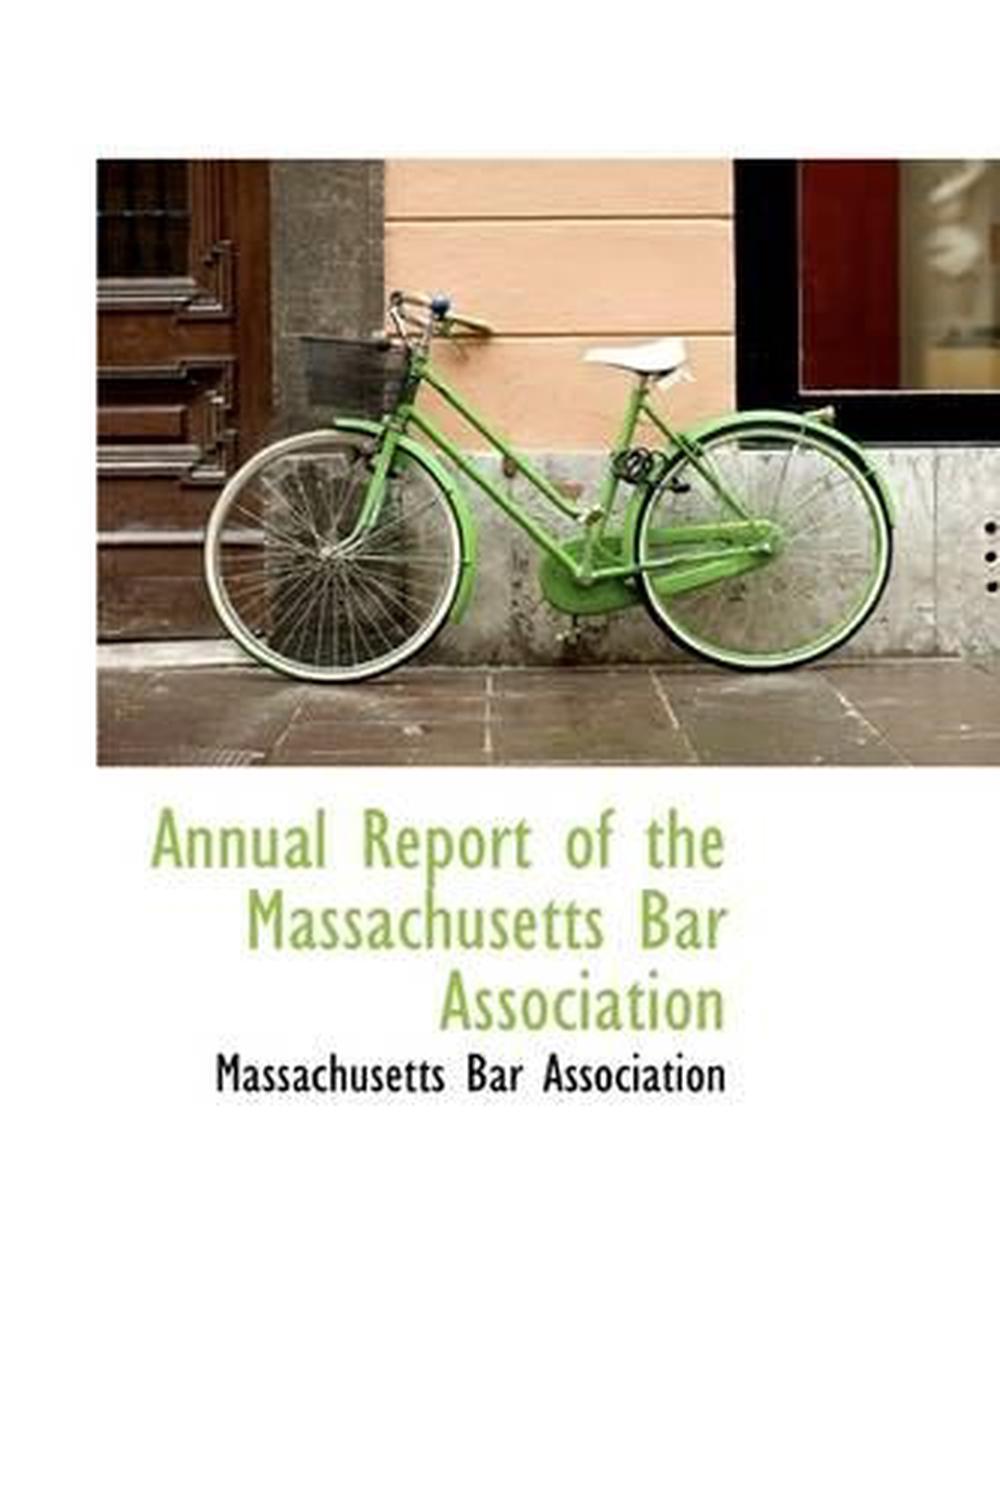 Annual Report of the Massachusetts Bar Association by Massachusetts Bar